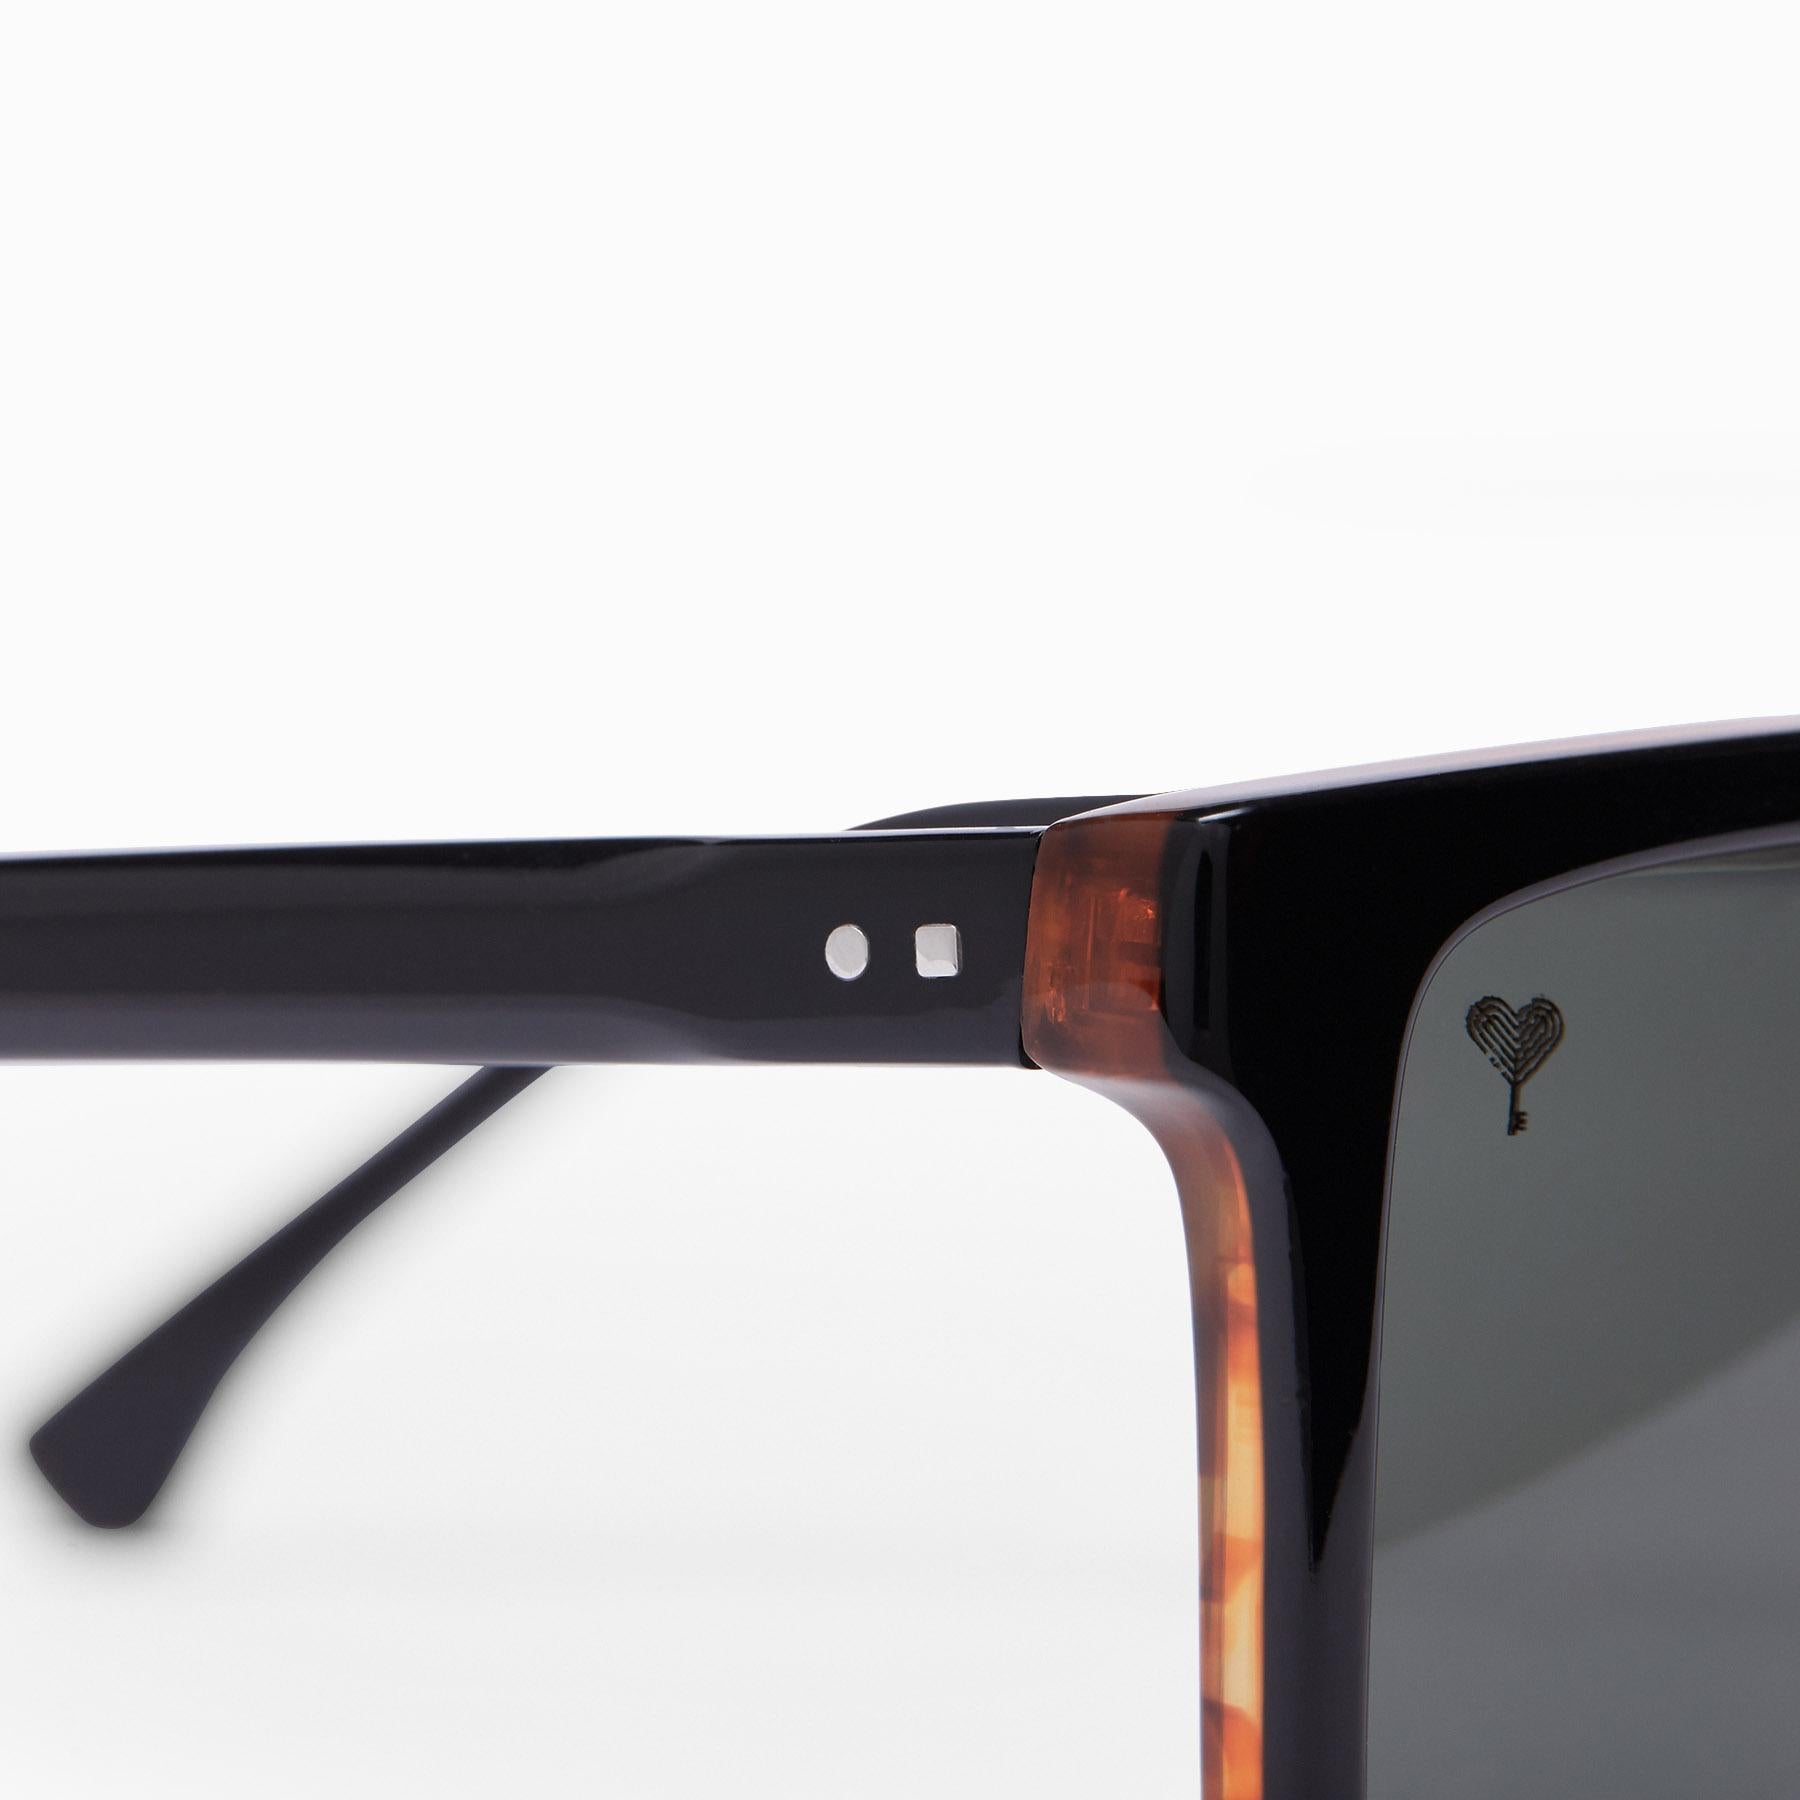 Black & Tan Square Sunglasses